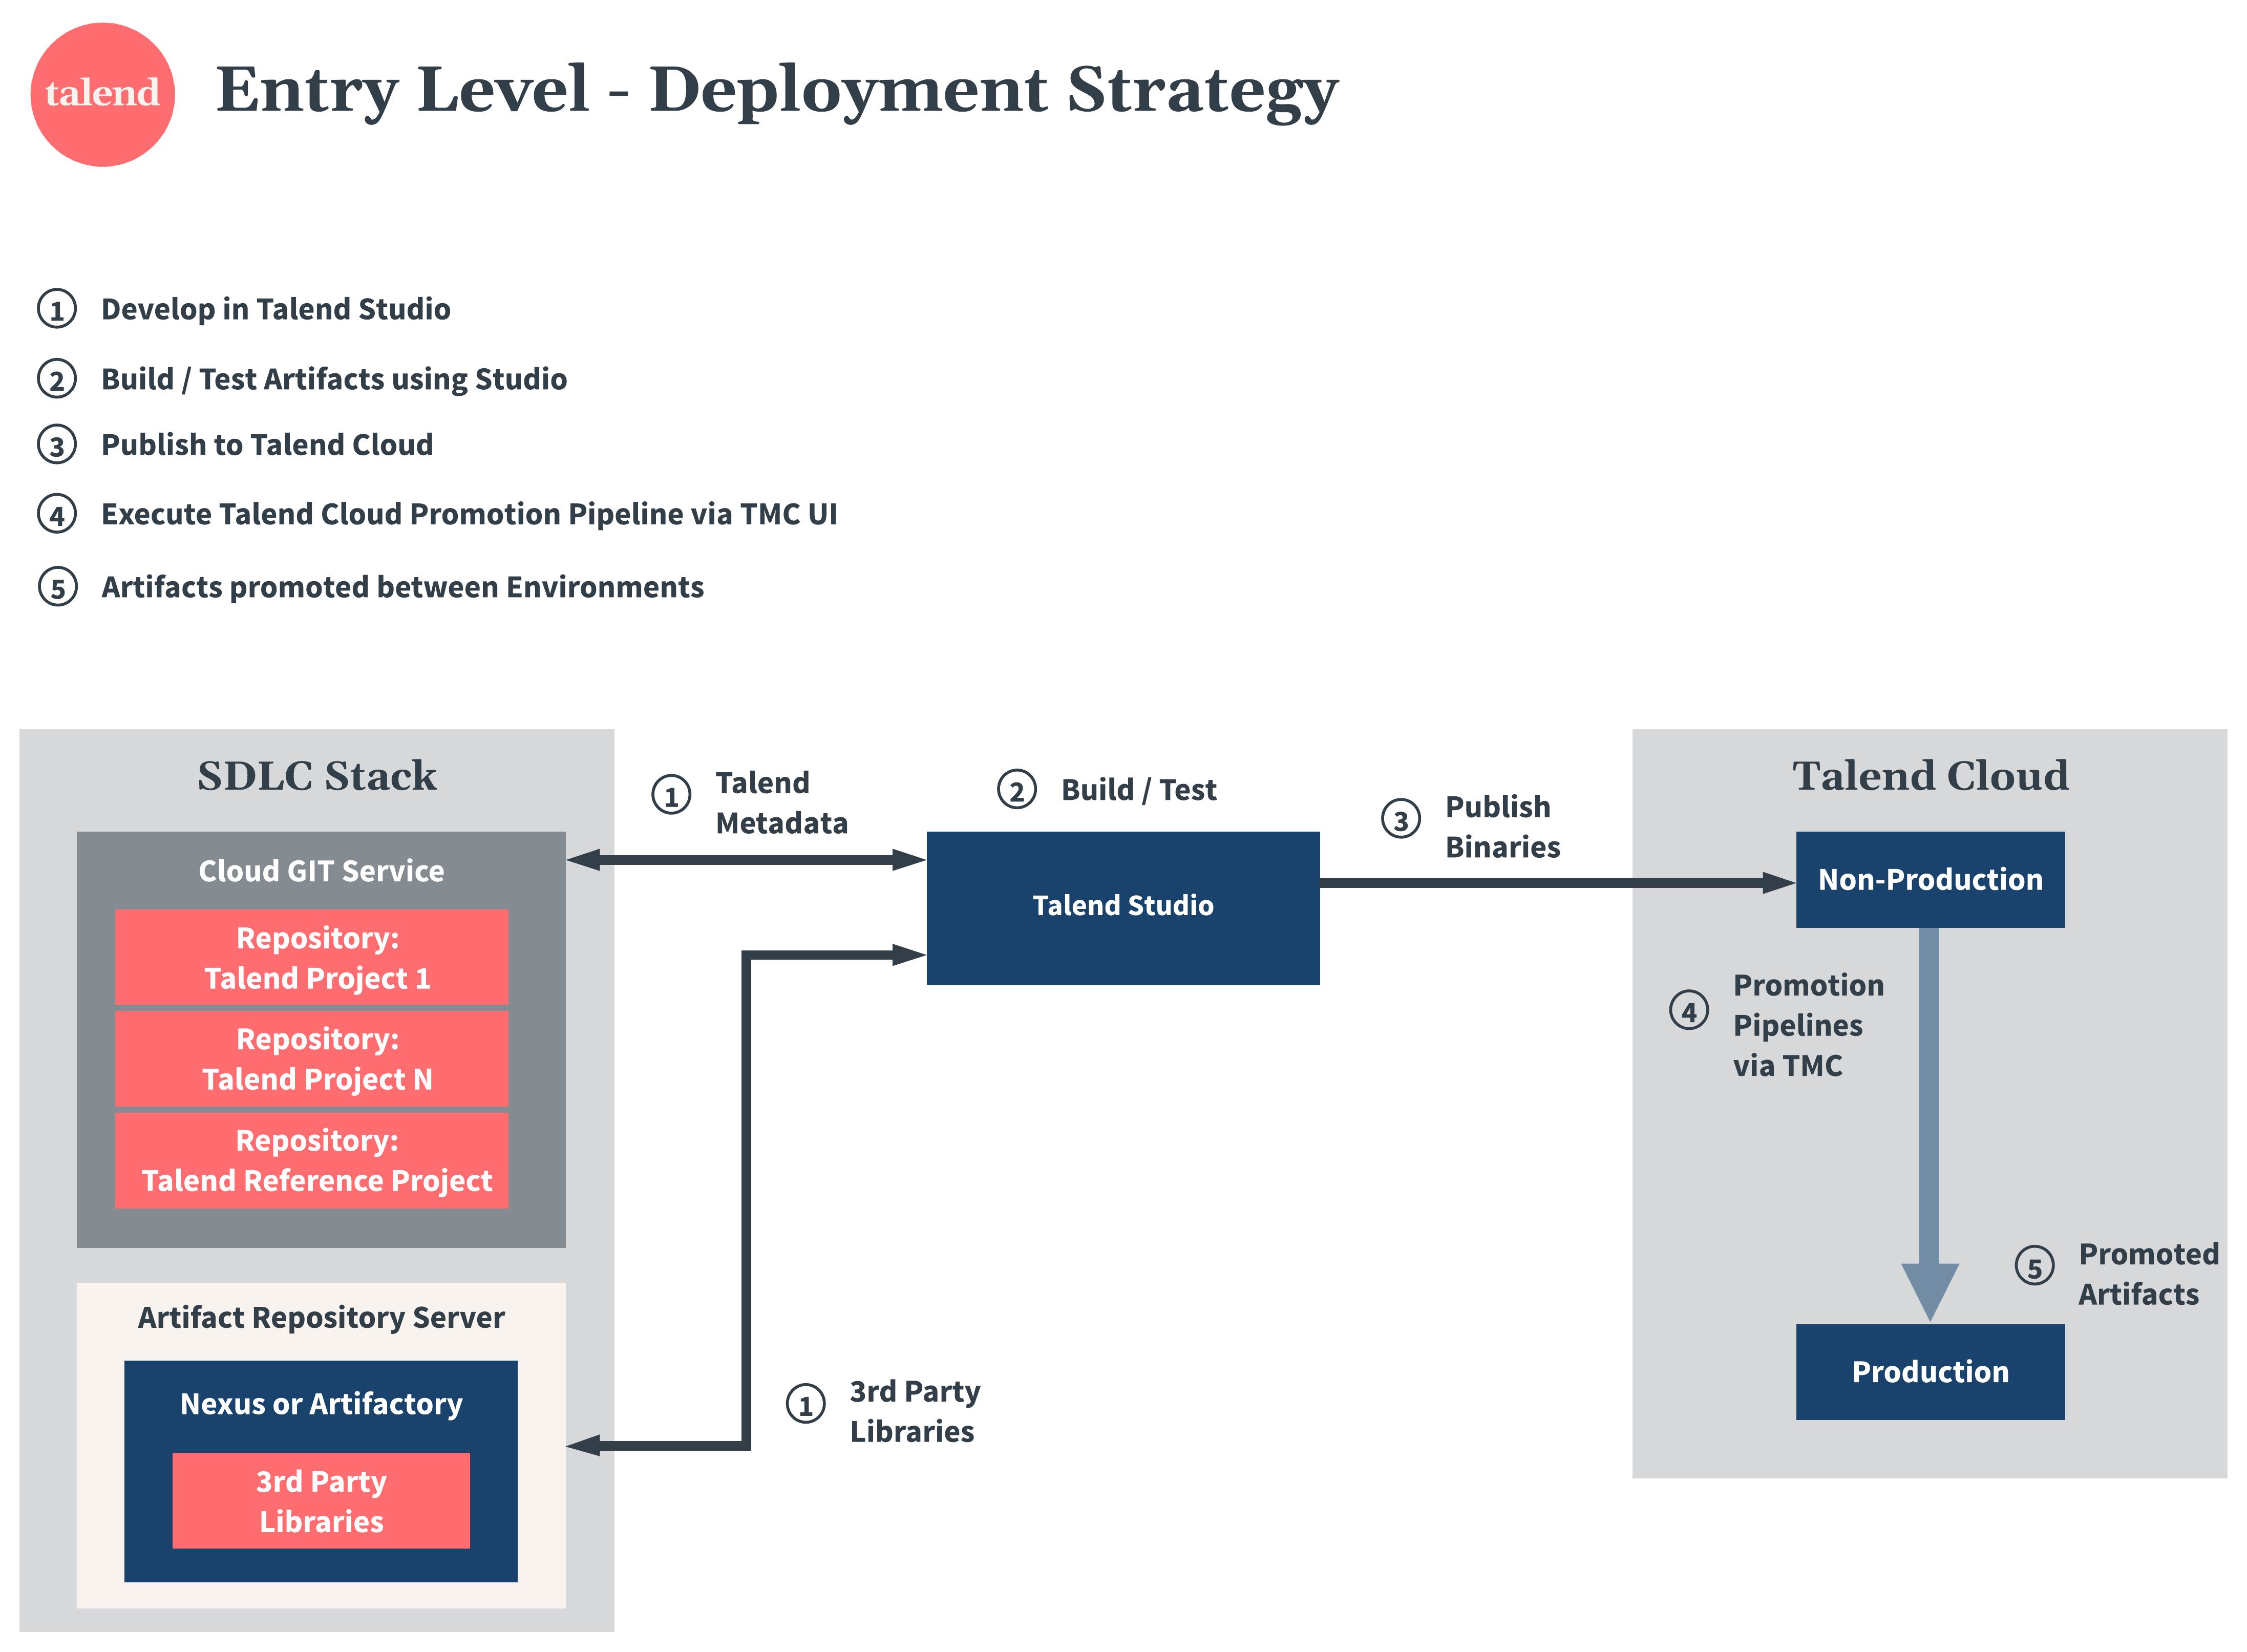 Talend Cloud deployment strategy diagram.